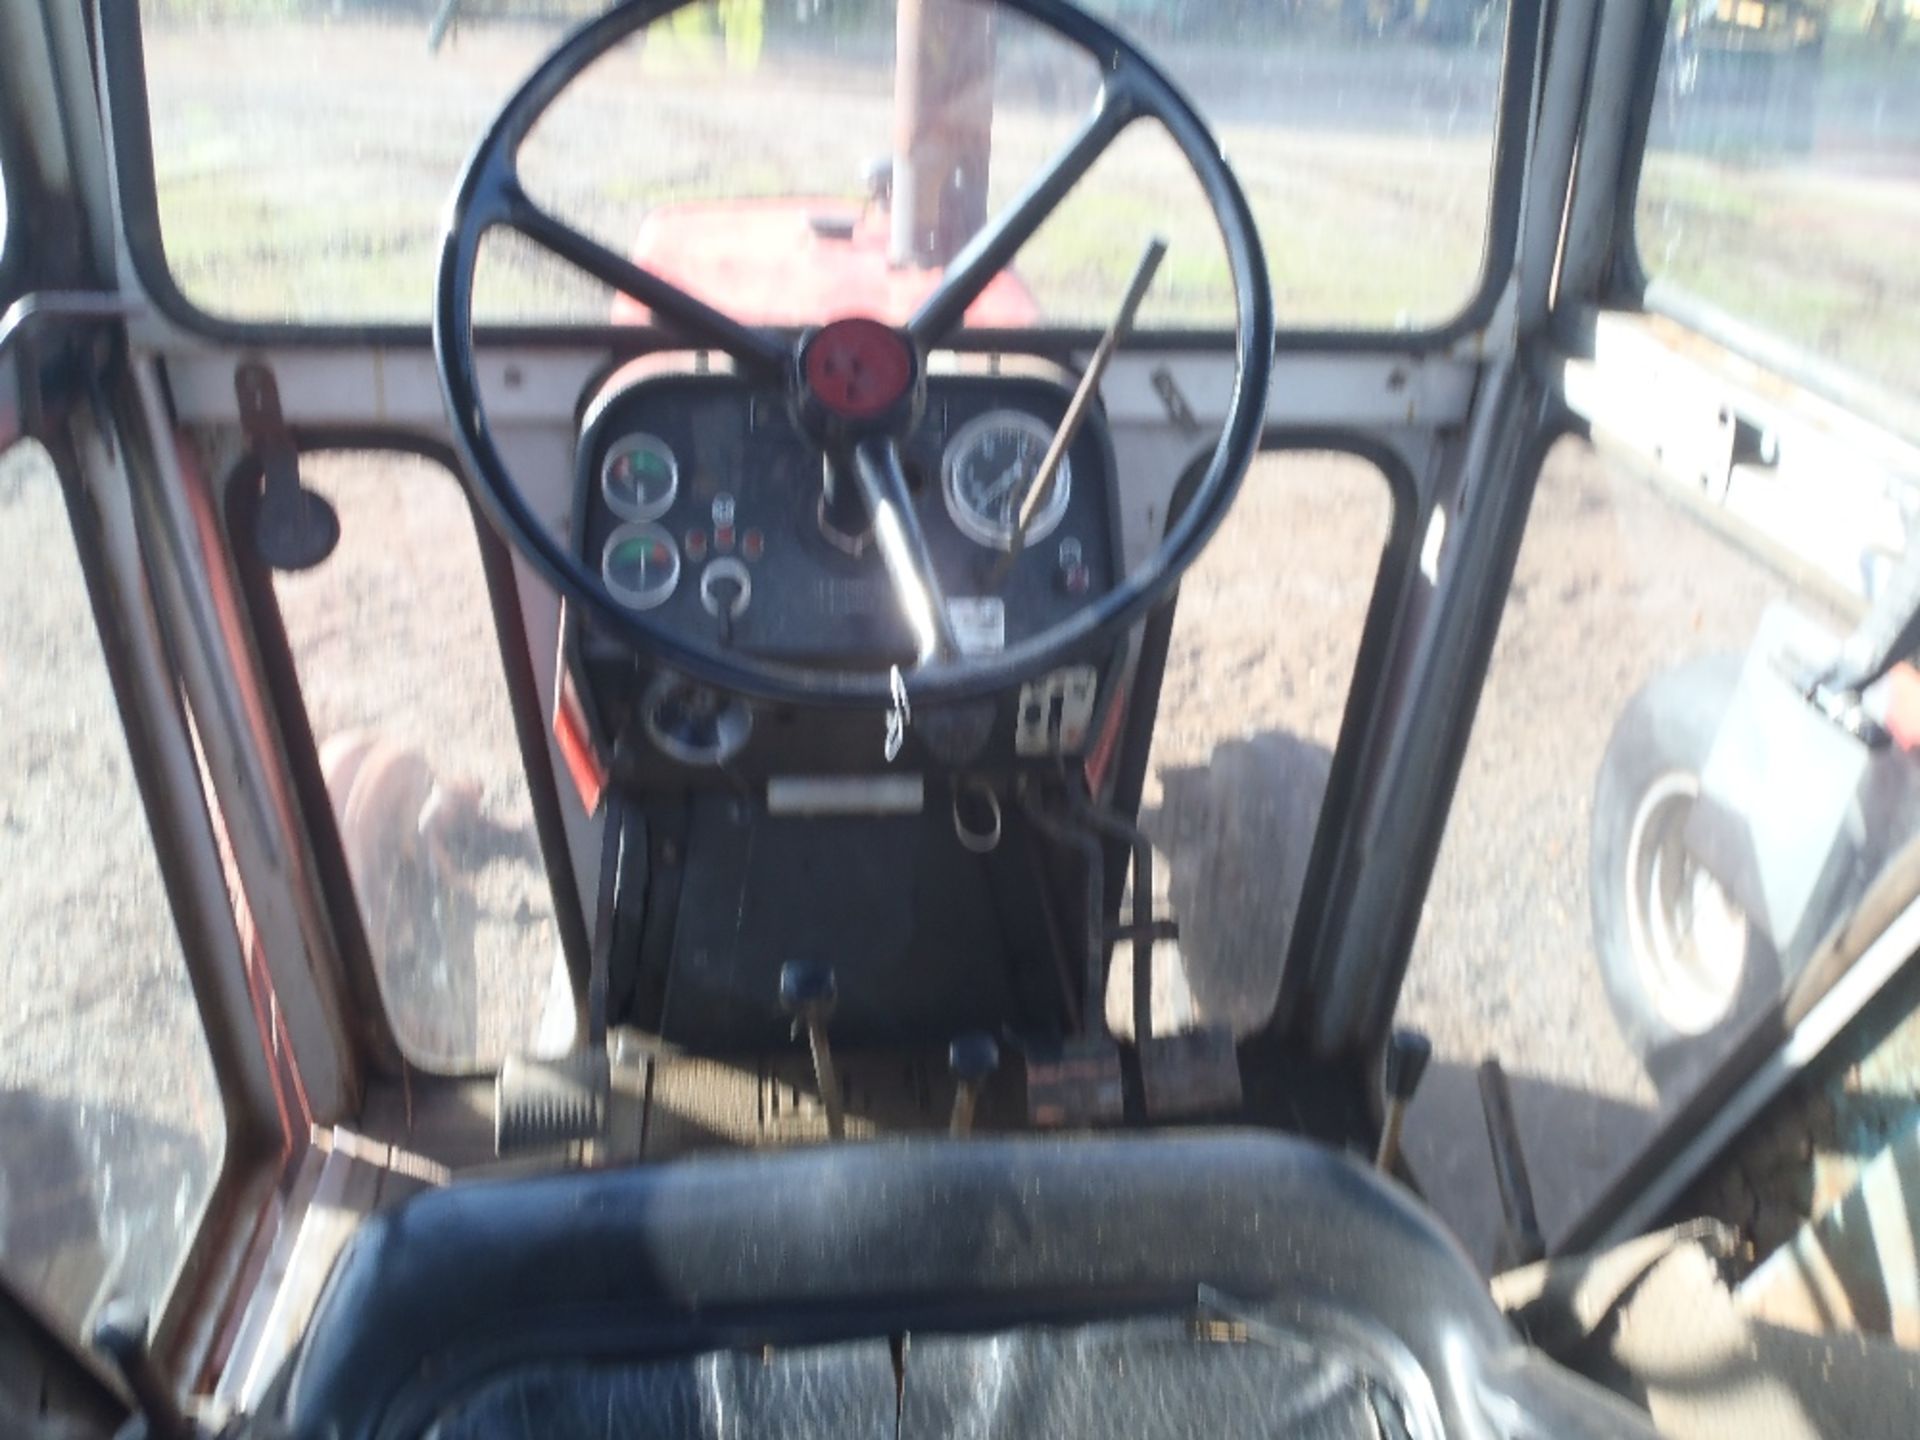 Massey Ferguson 590 Tractor. Reg. No. VKP 283S Ser. No. H138204 - Image 7 of 7